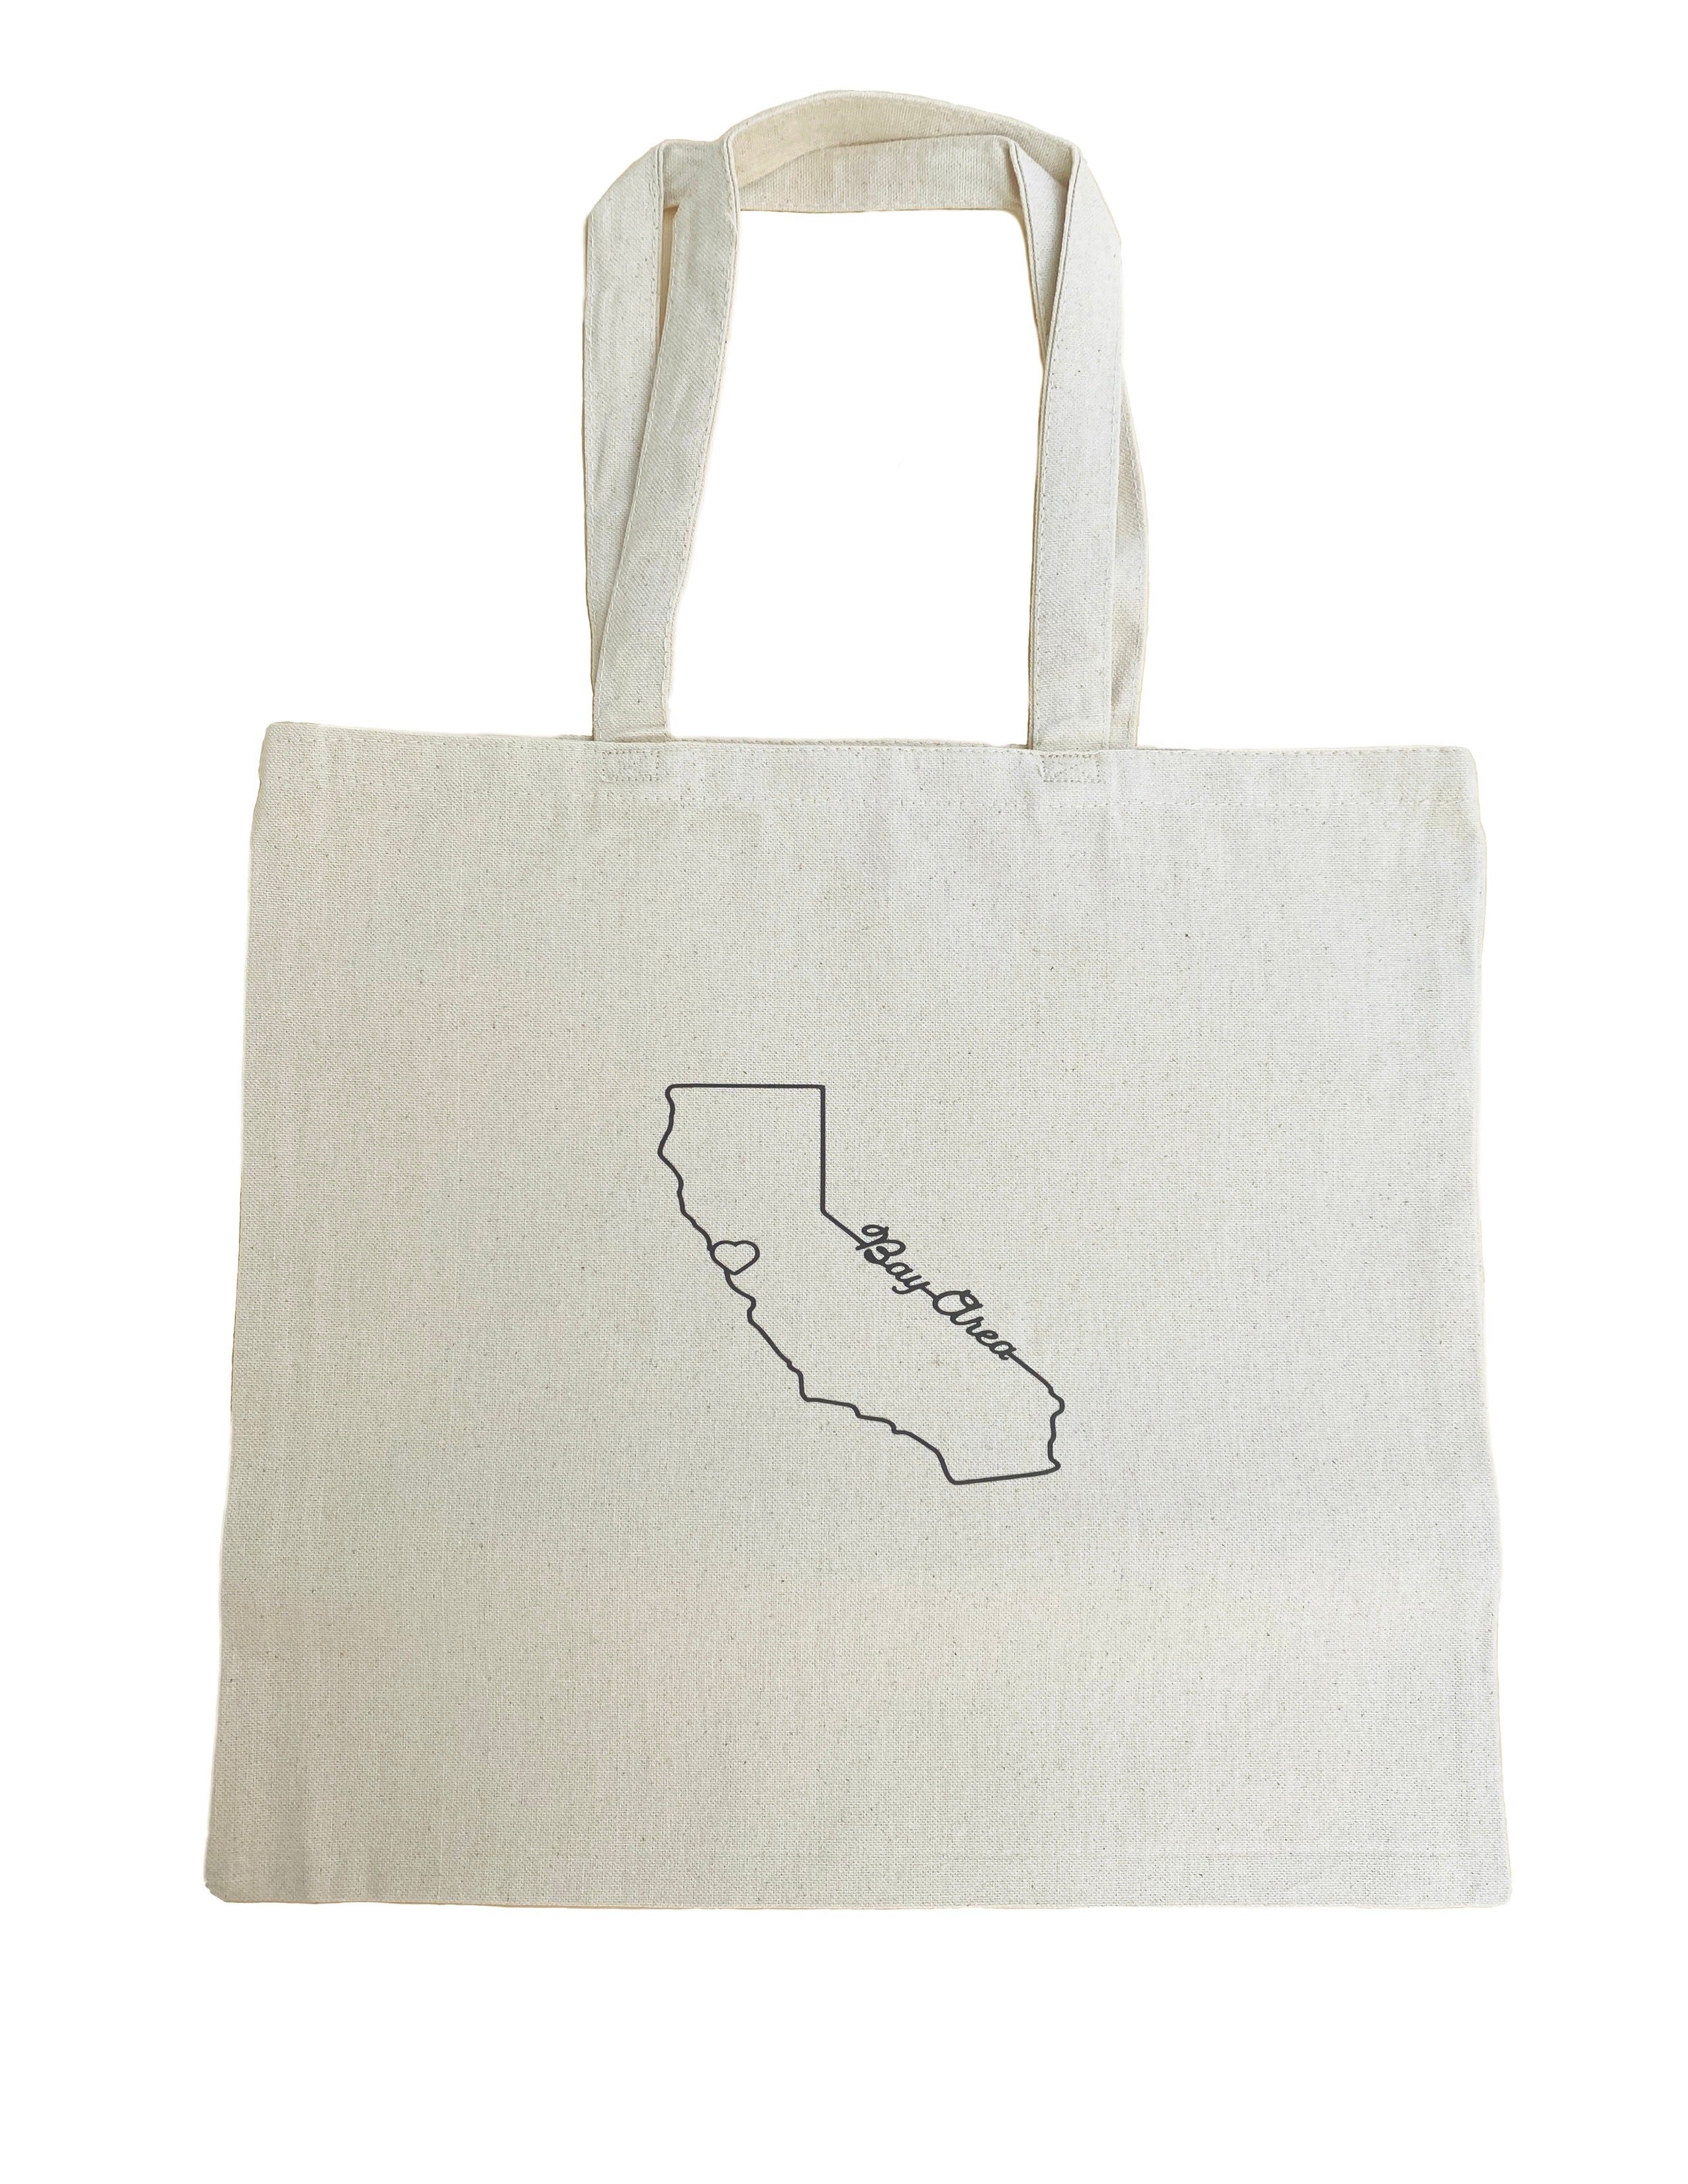 Bay Area Tote Bag